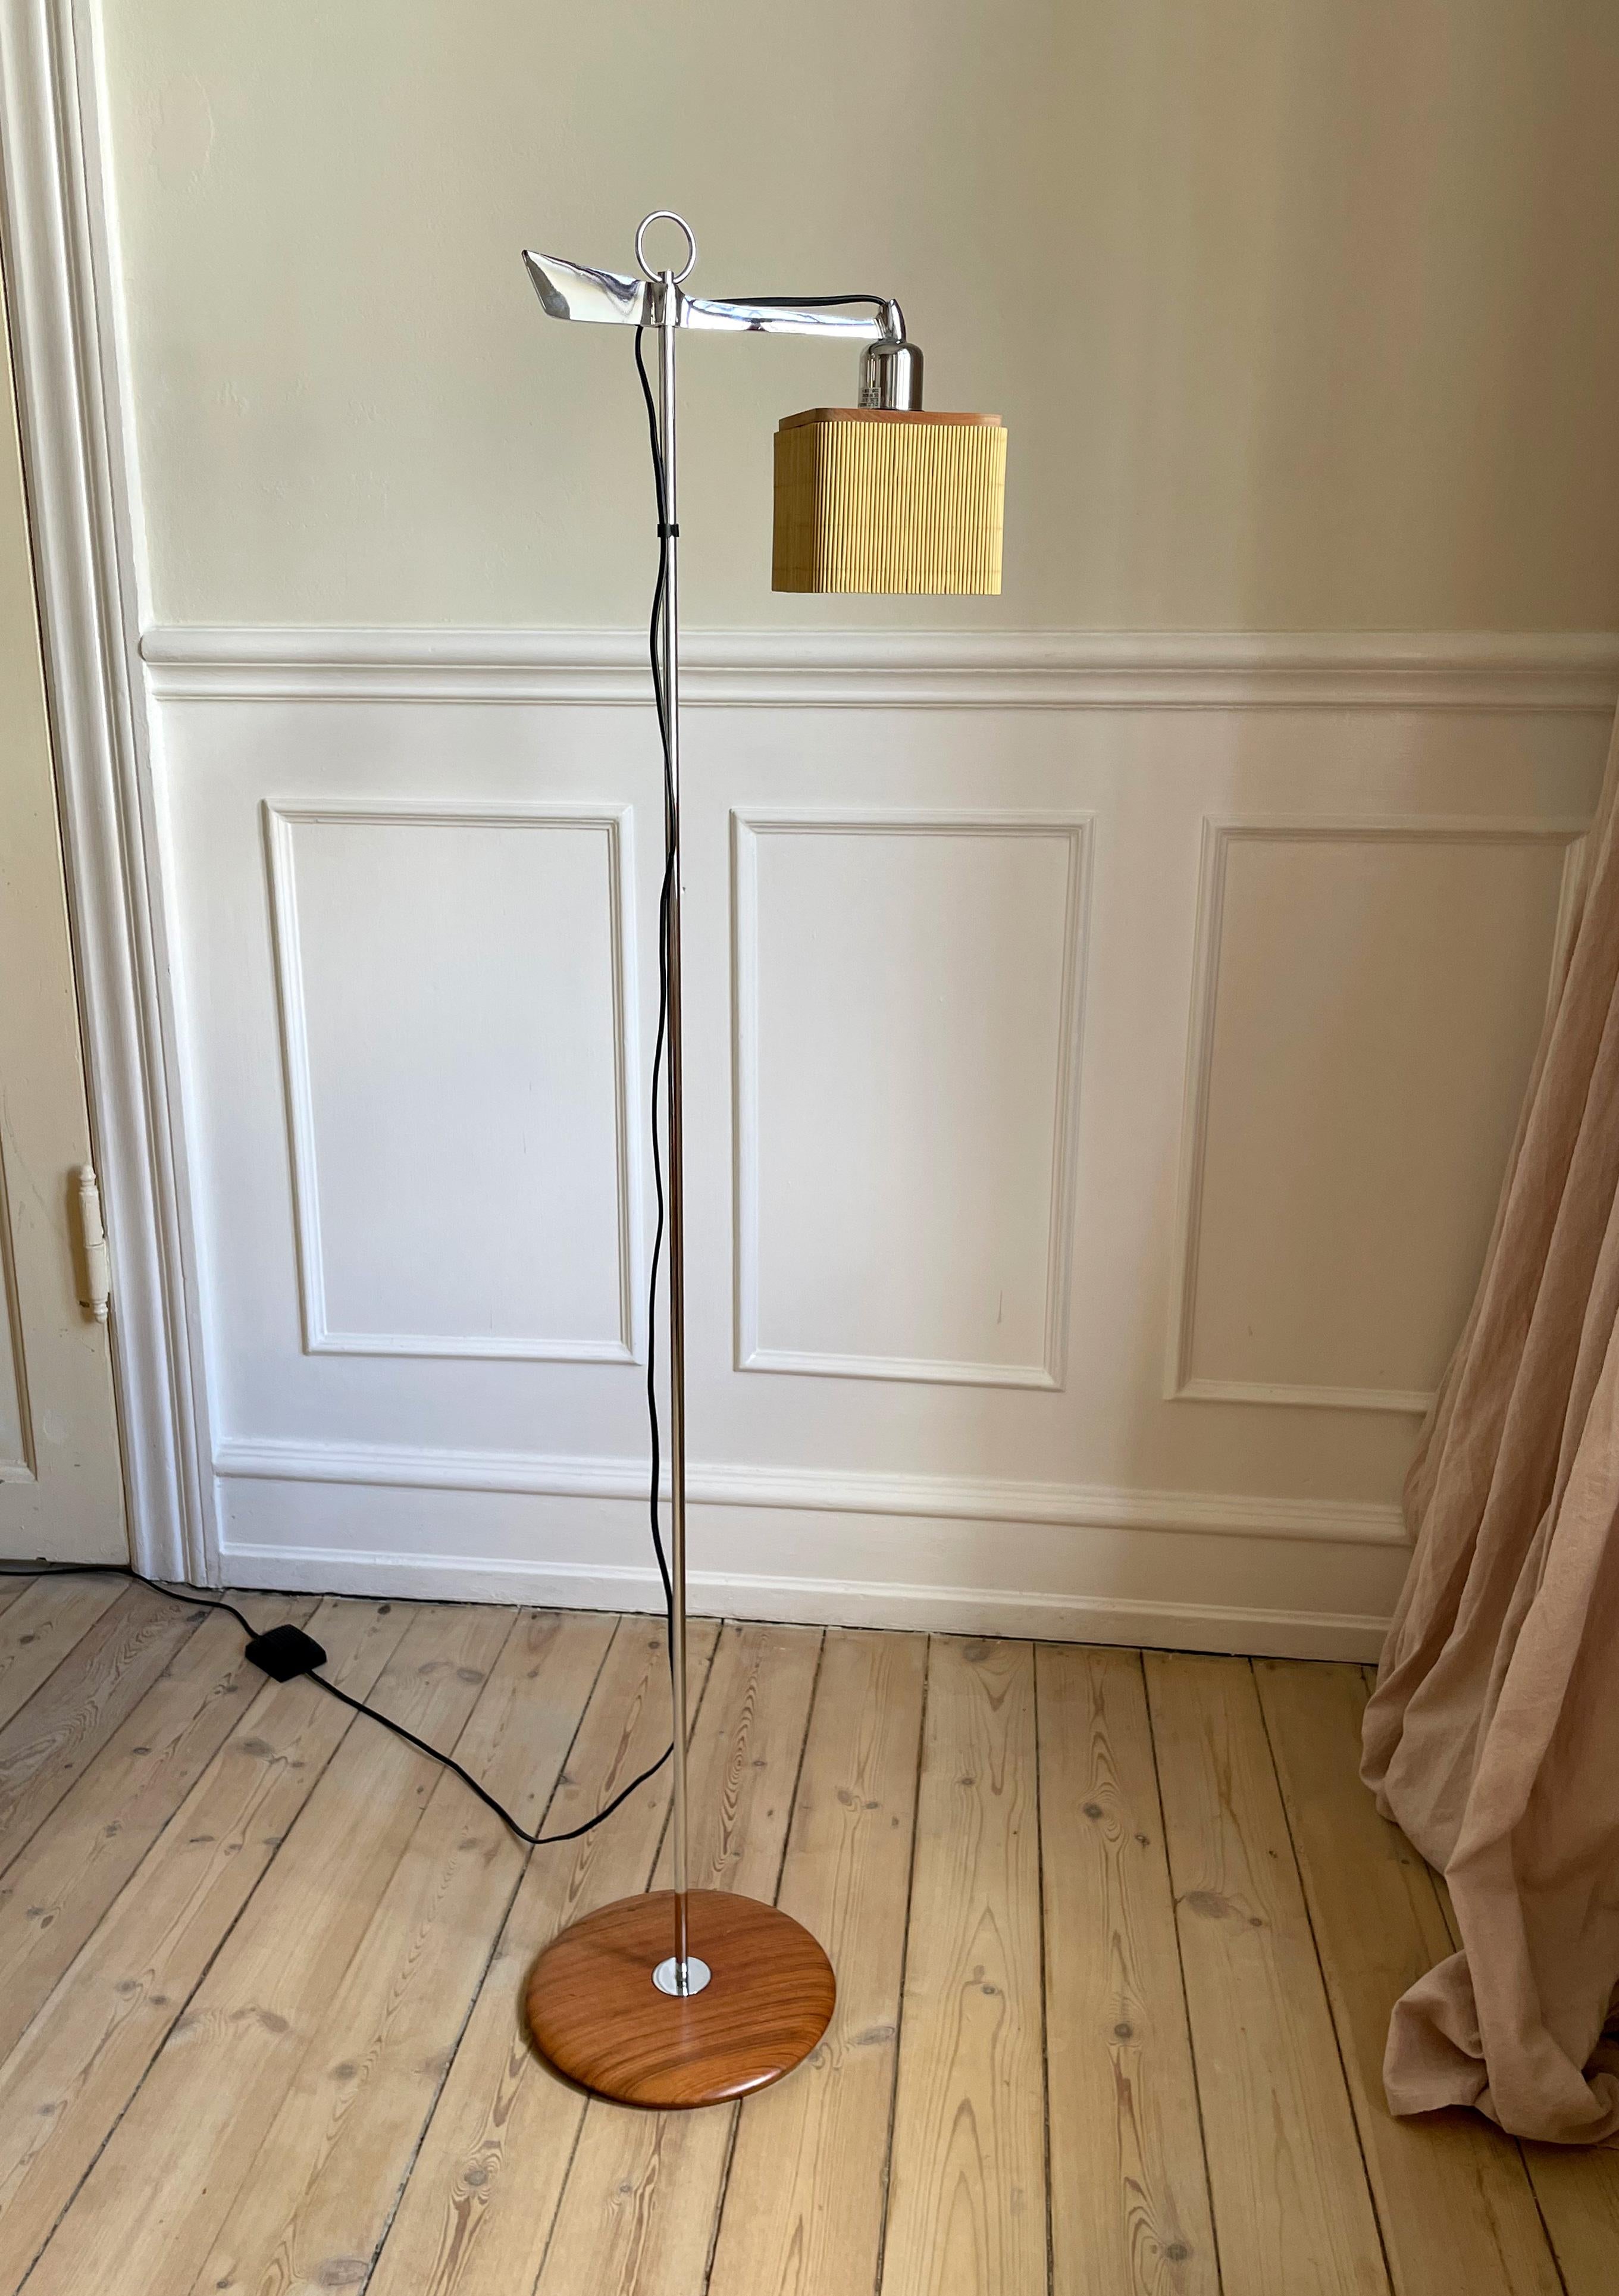 Adjustable Spanish Modernist Floor Lamp, Chrome, Wood, Rattan, 2010s For Sale 9